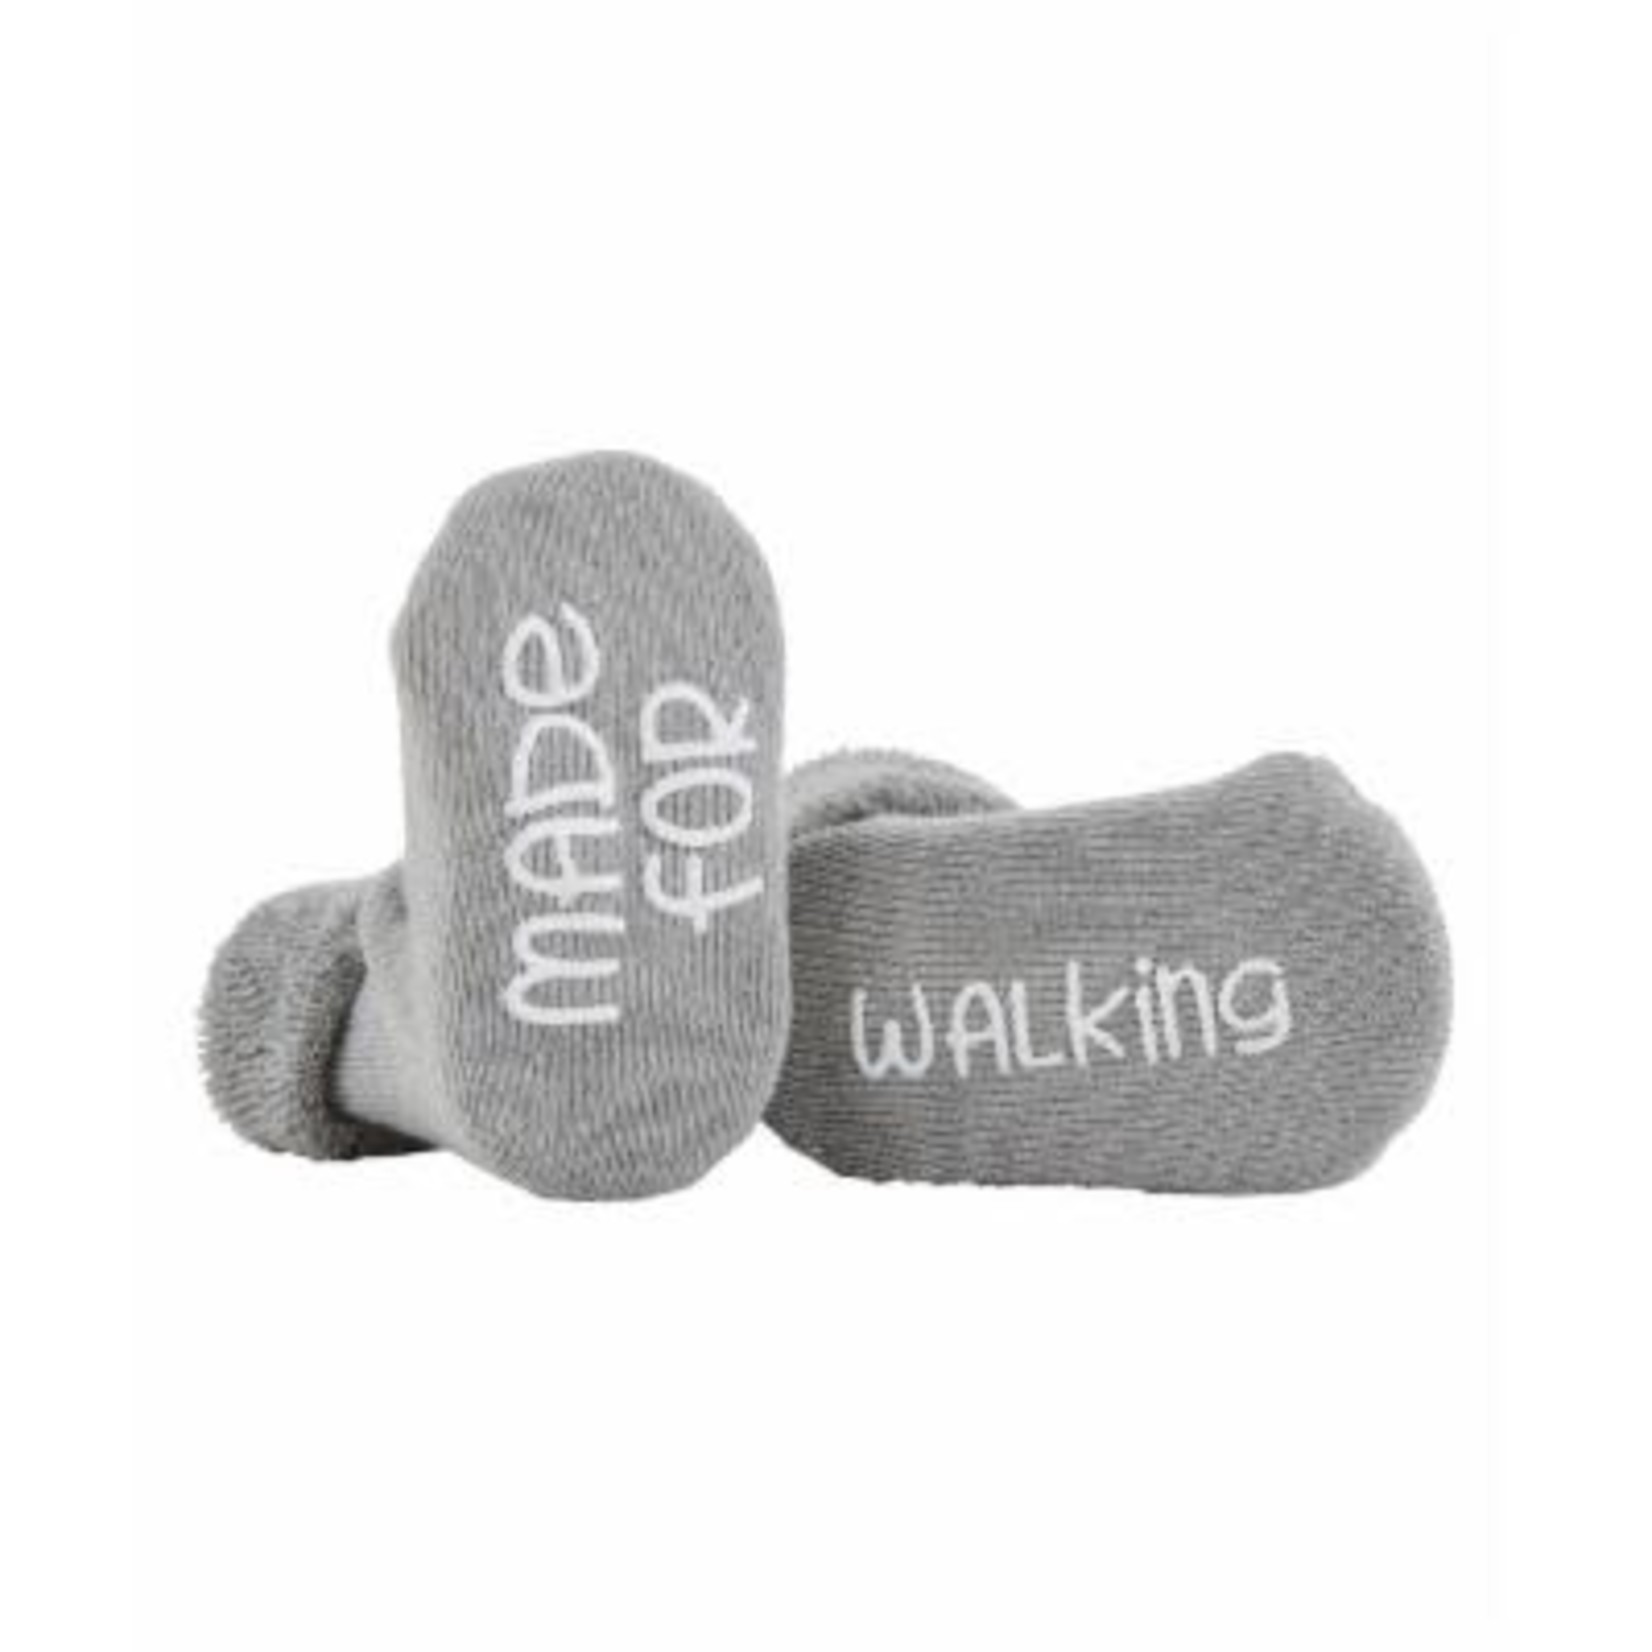 Made for walking grey socks